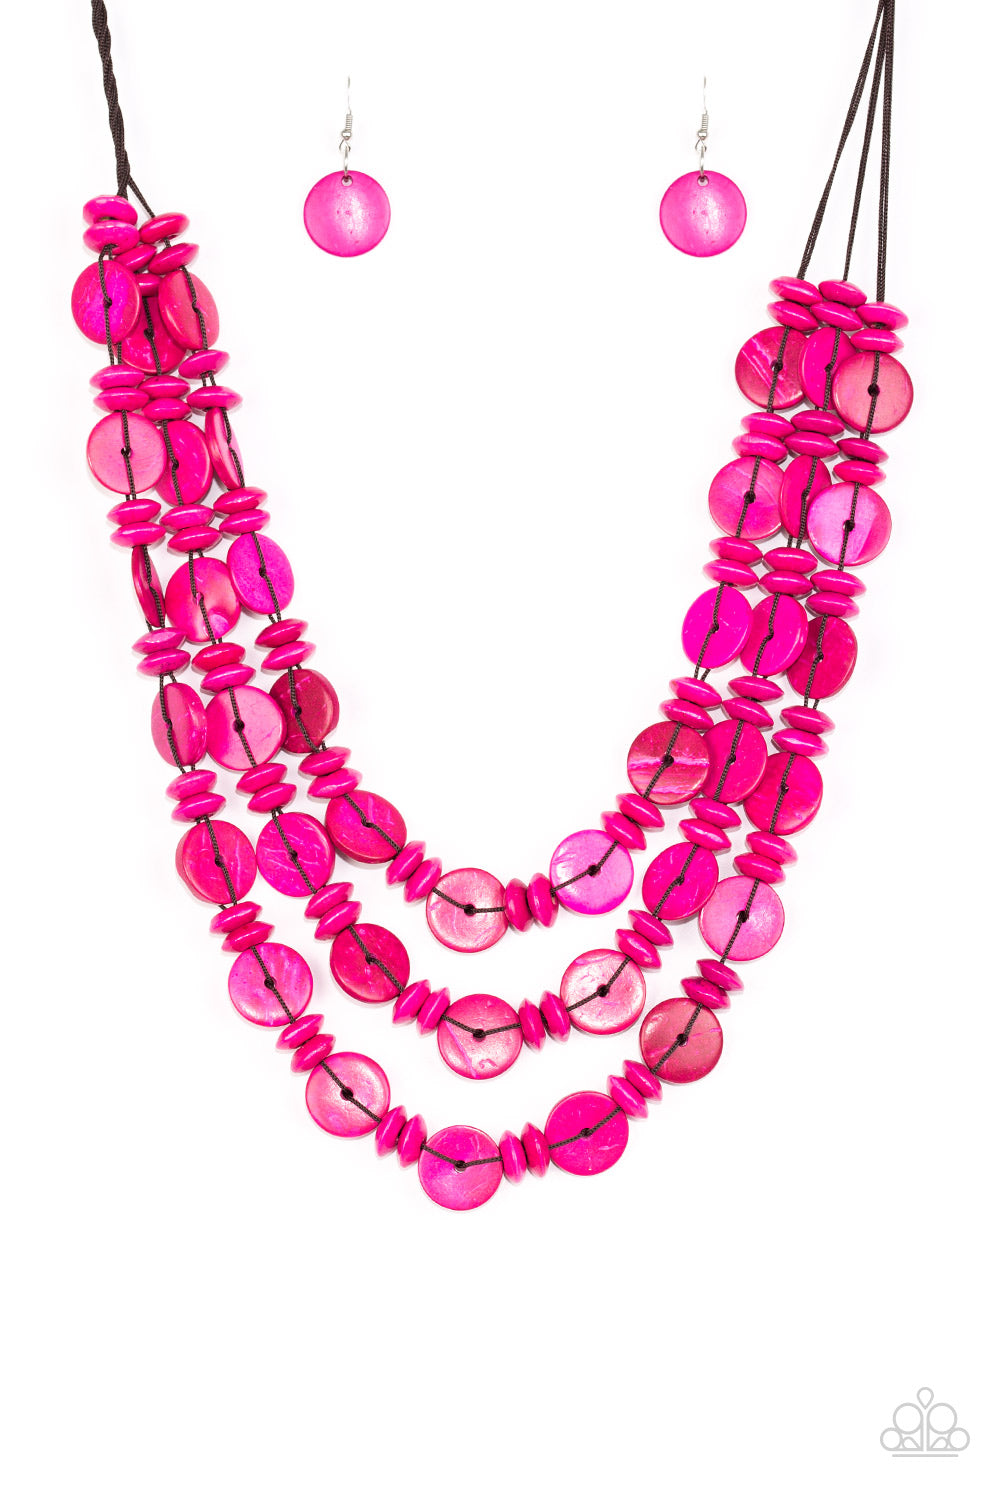 Barbados Bopper - Pink Paparazzi Jewelry-195